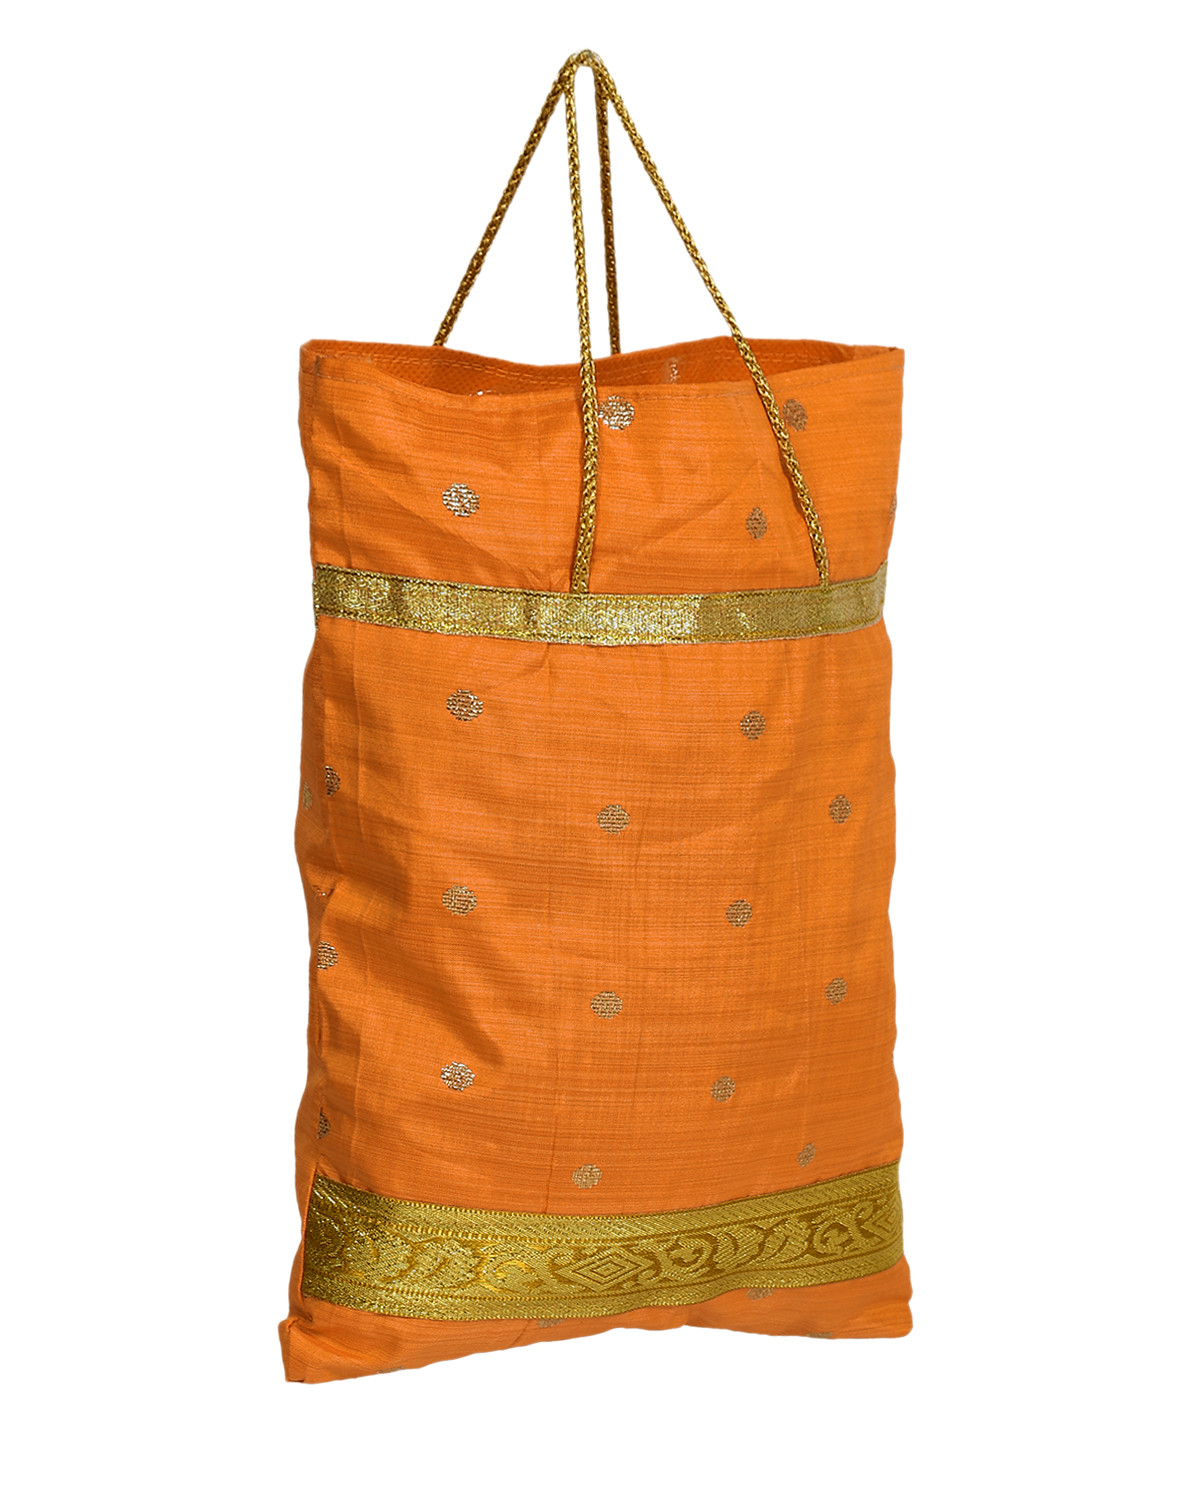 Kuber Industries Polyester Dot Design Foldable Potli|Shopping|Gifting, Hand Bag With Handle (Yellow)